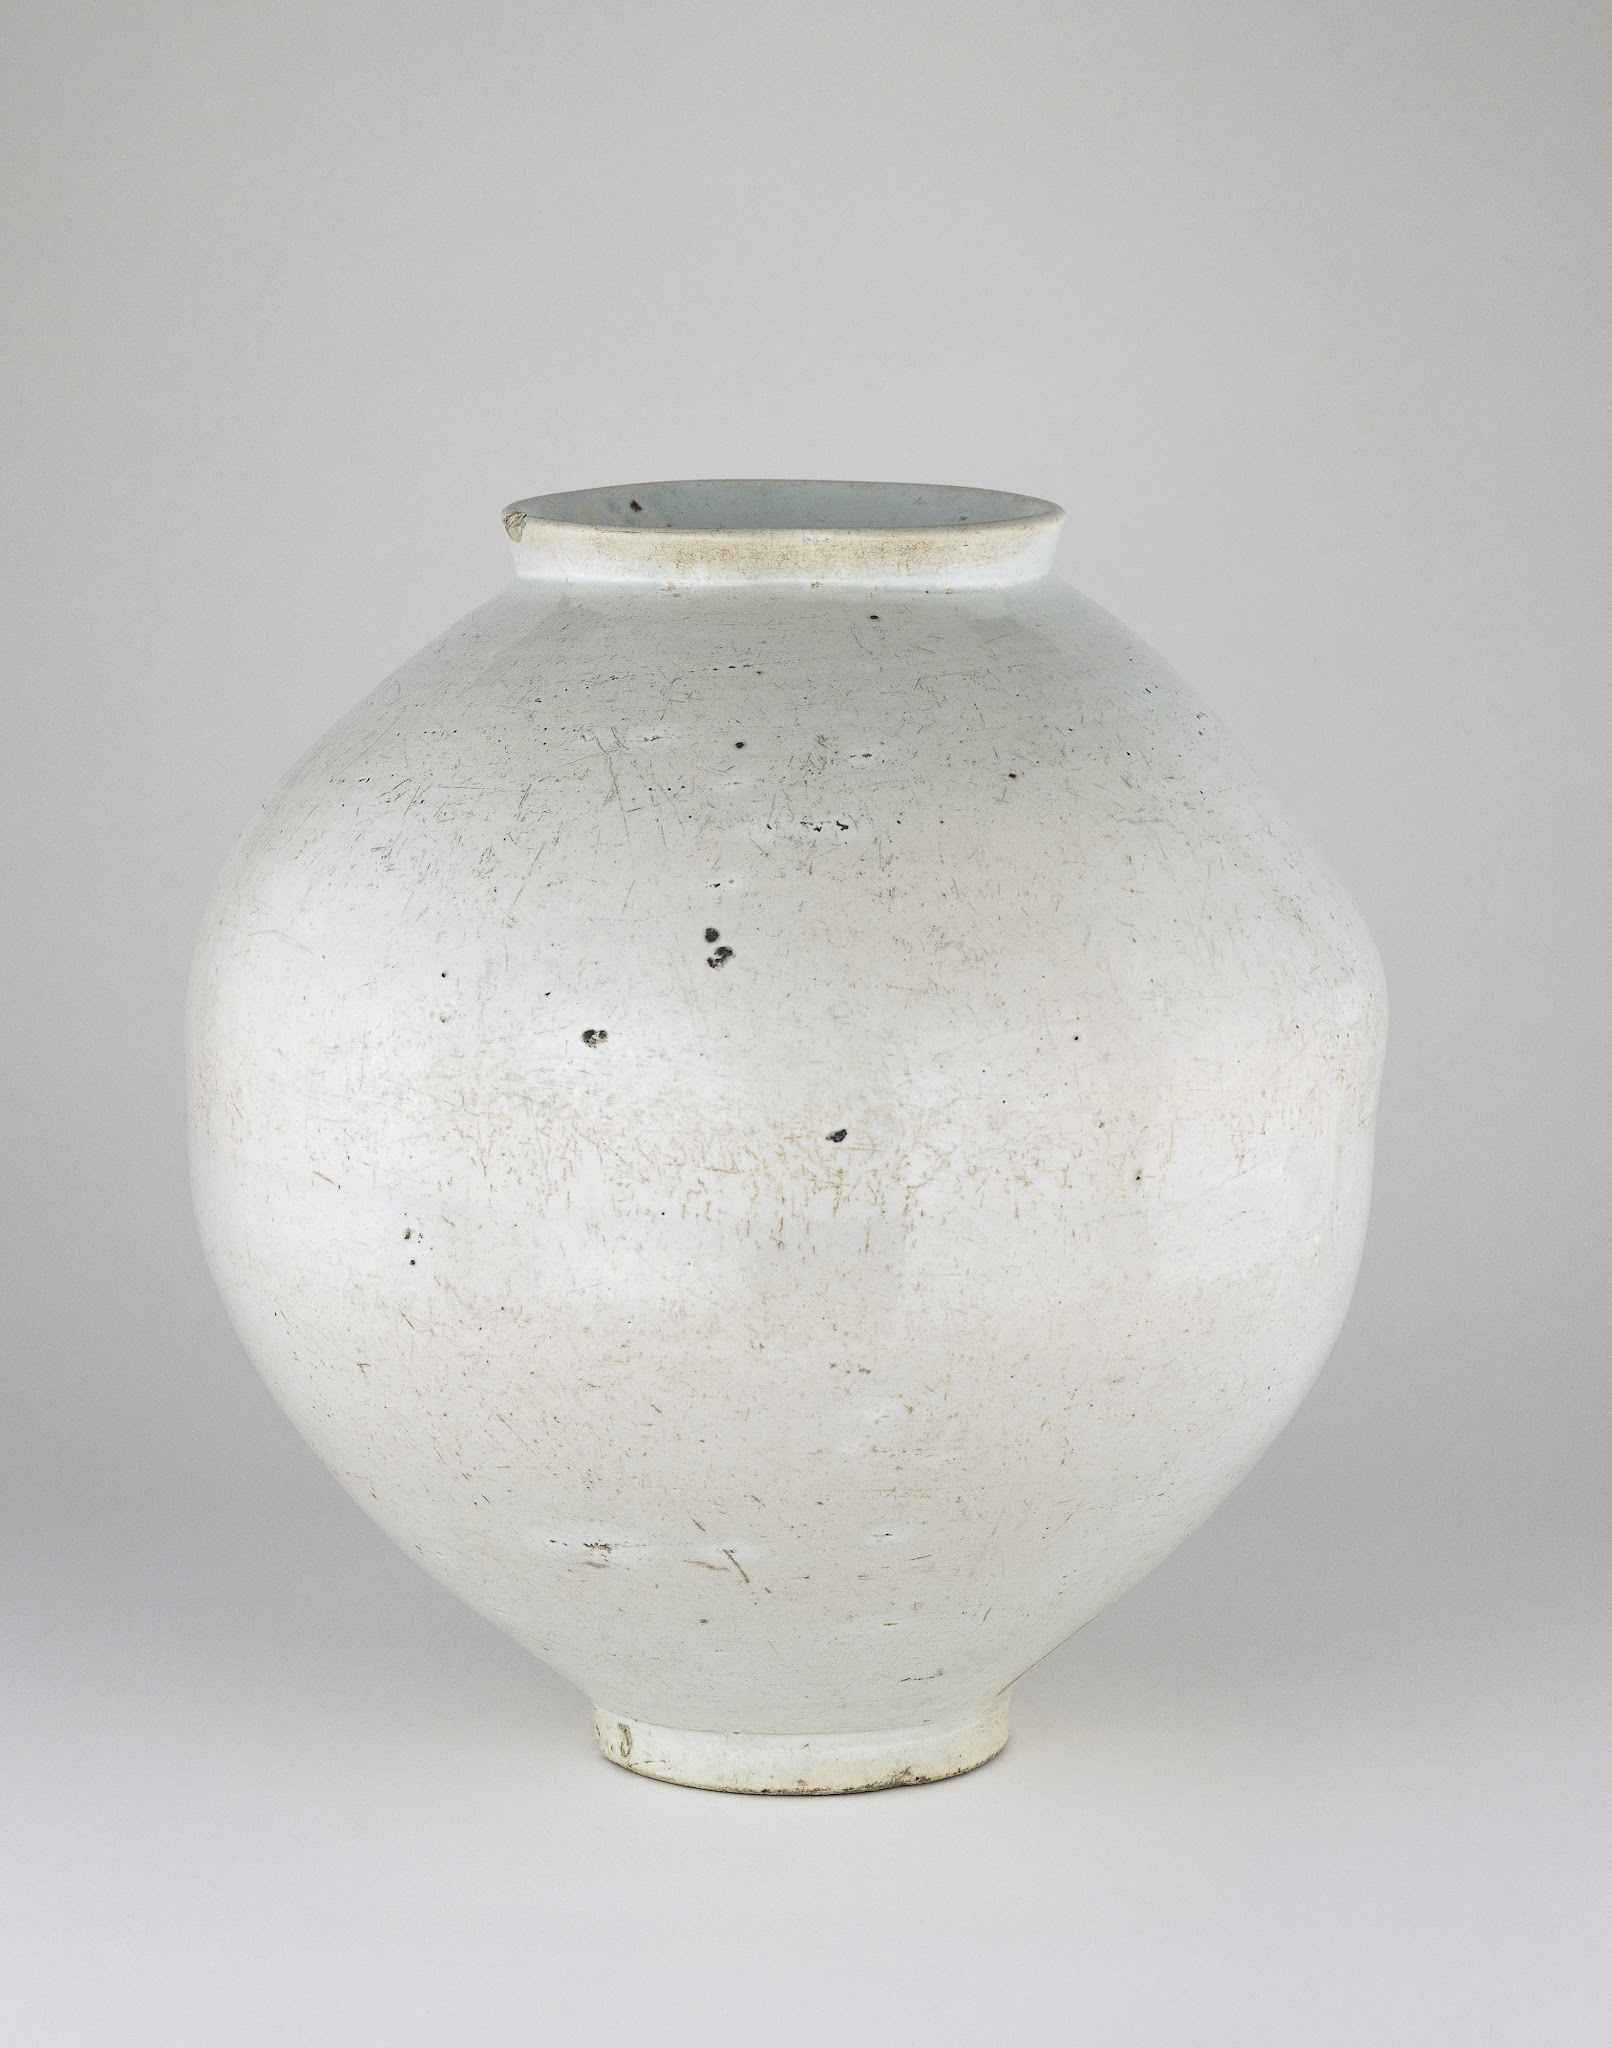 moon jar (백자대호 白磁大壺), 18c, The British Museum